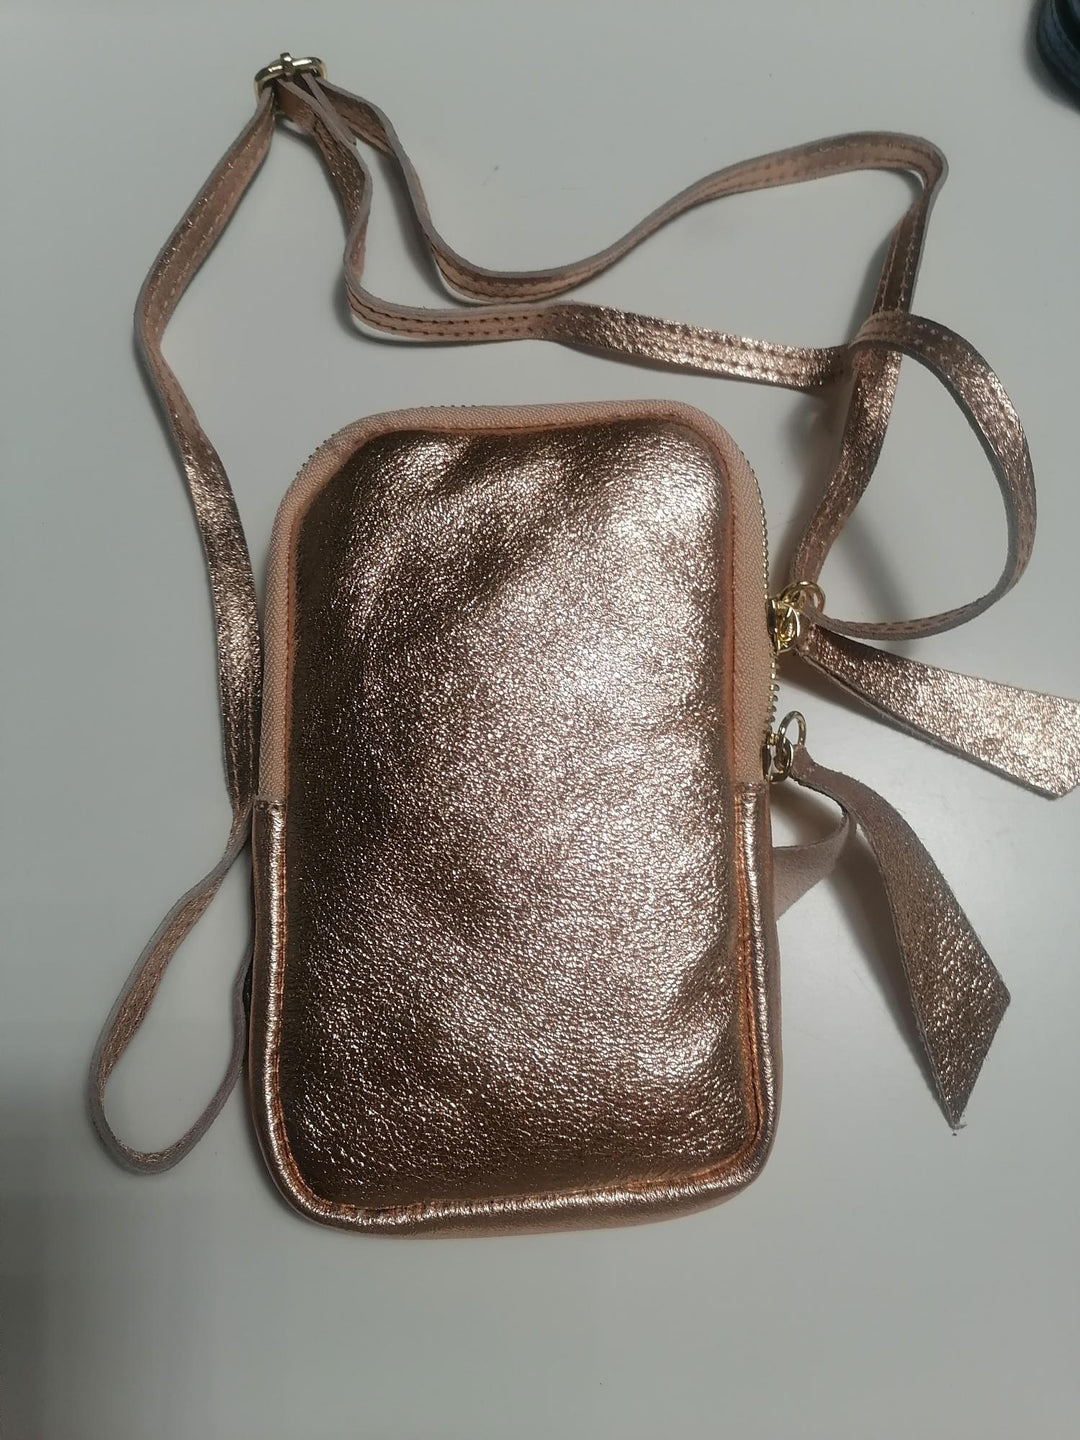 Mini goudroze metallic crossbody tas van leder - axent - ITA003-shiny-goudroze - grote maten - dameskleding - kledingwinkel - herent - leuven